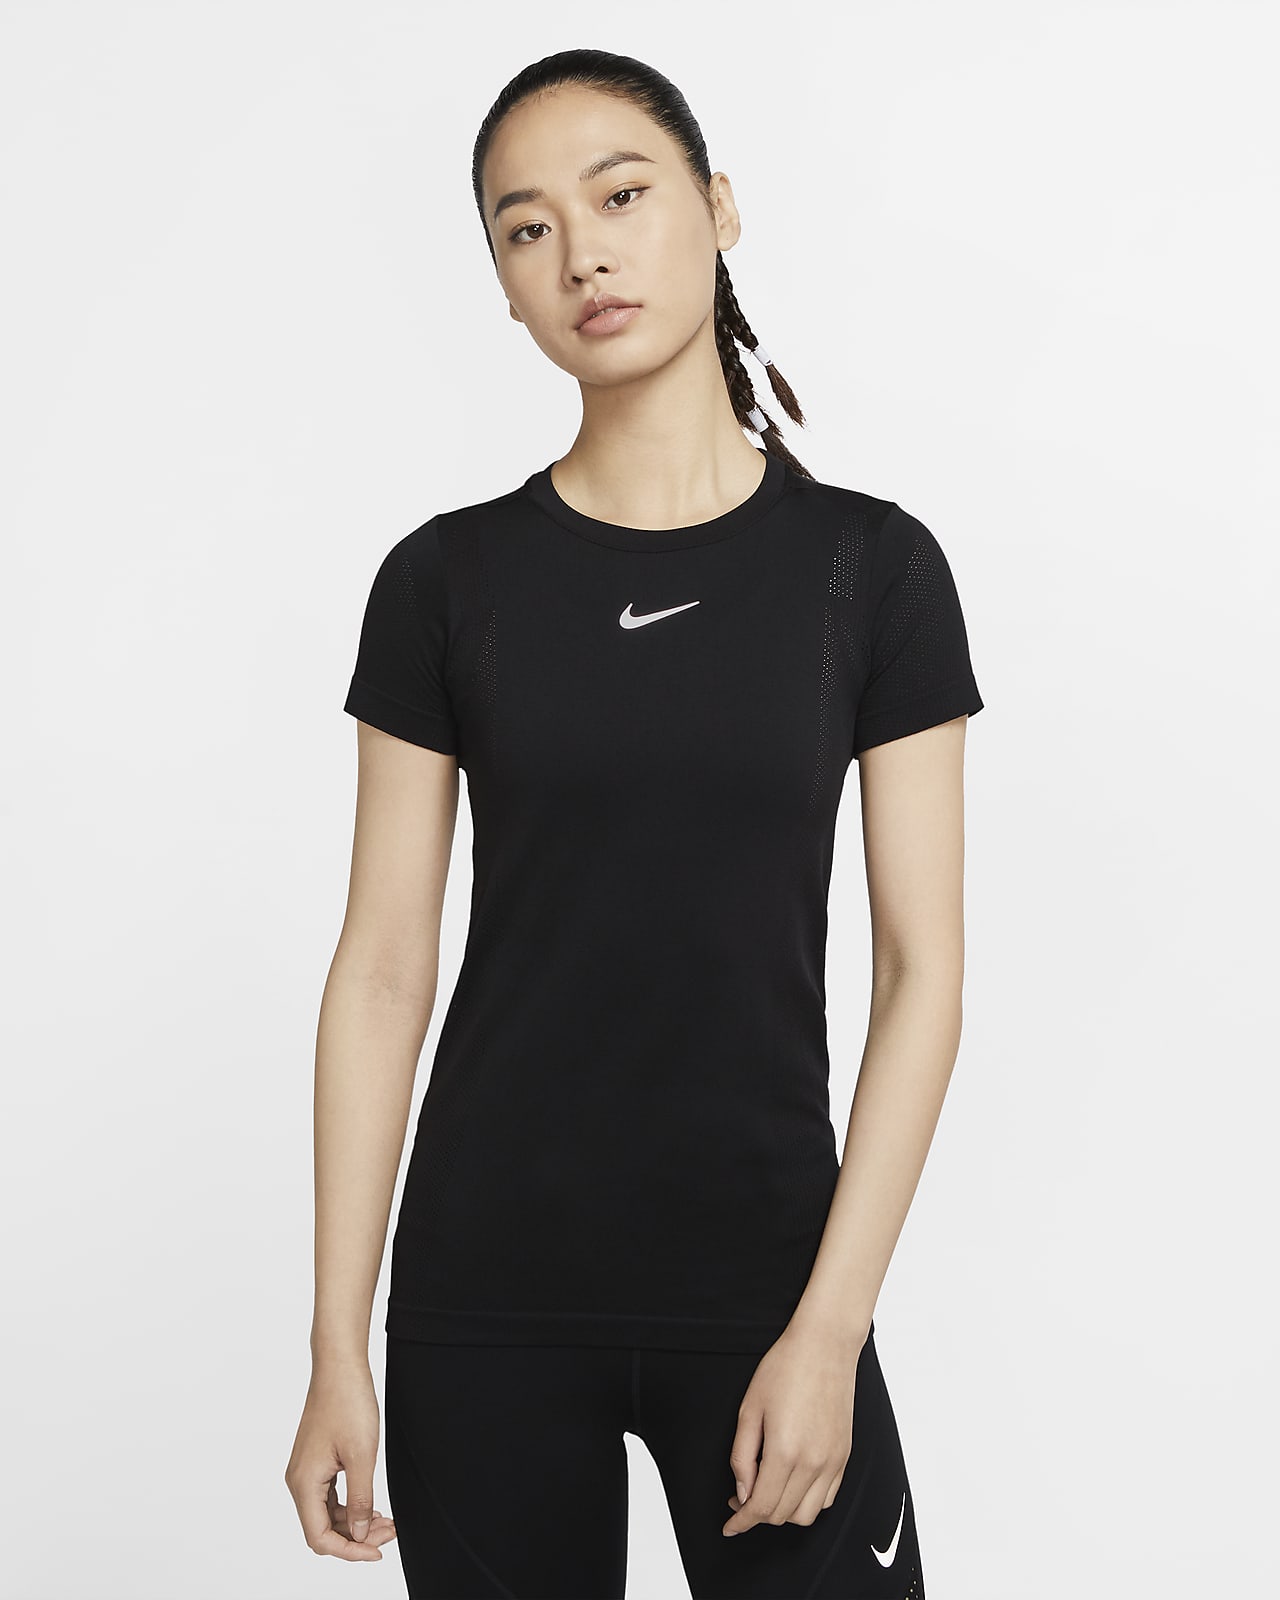 Nike Infinite Women's Running Top. Nike LU